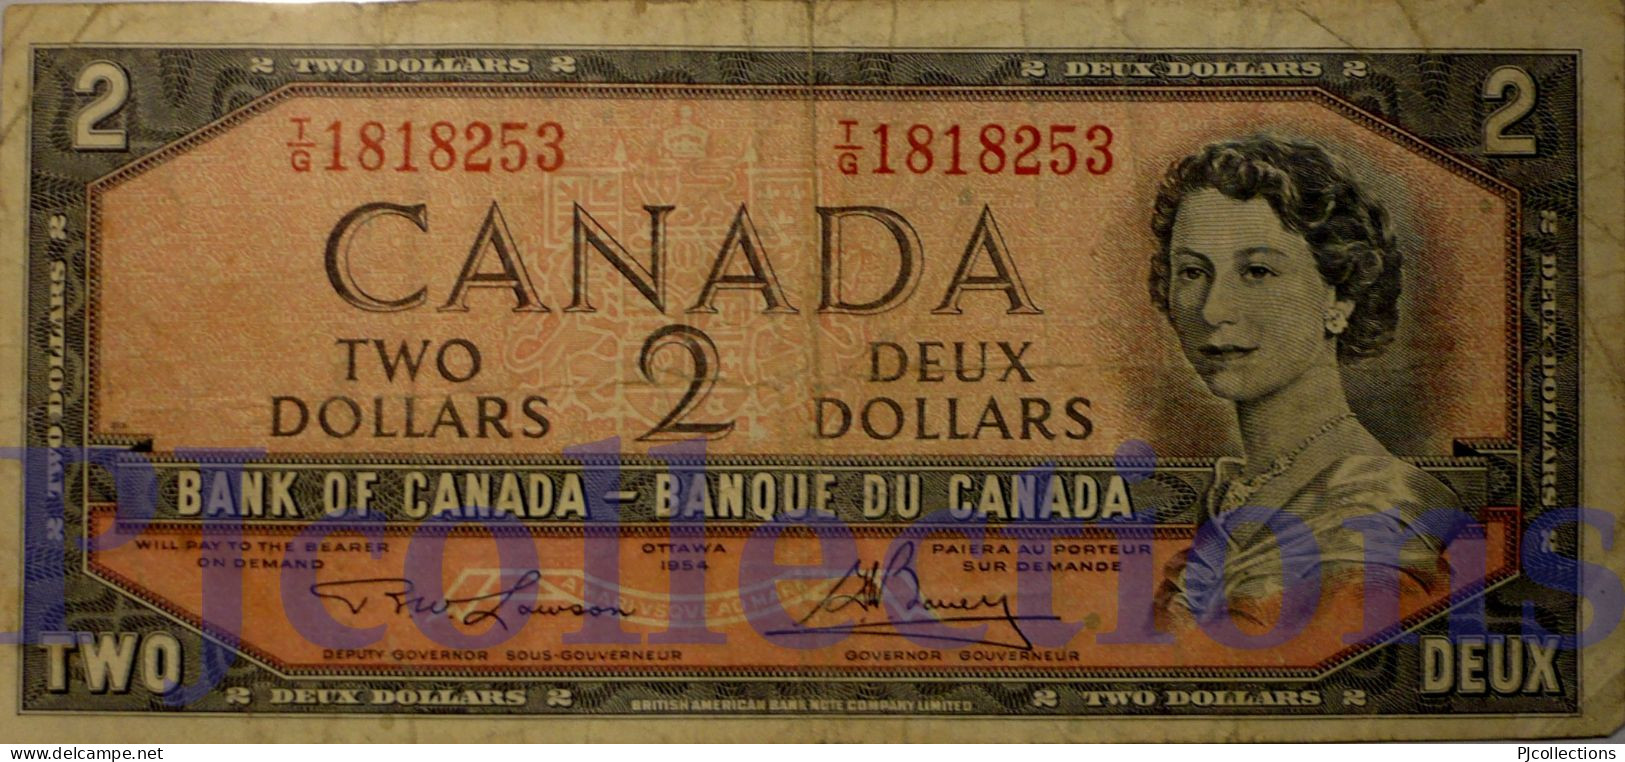 CANADA 2 DOLLARS 1954 PICK 76d F/VF - Canada